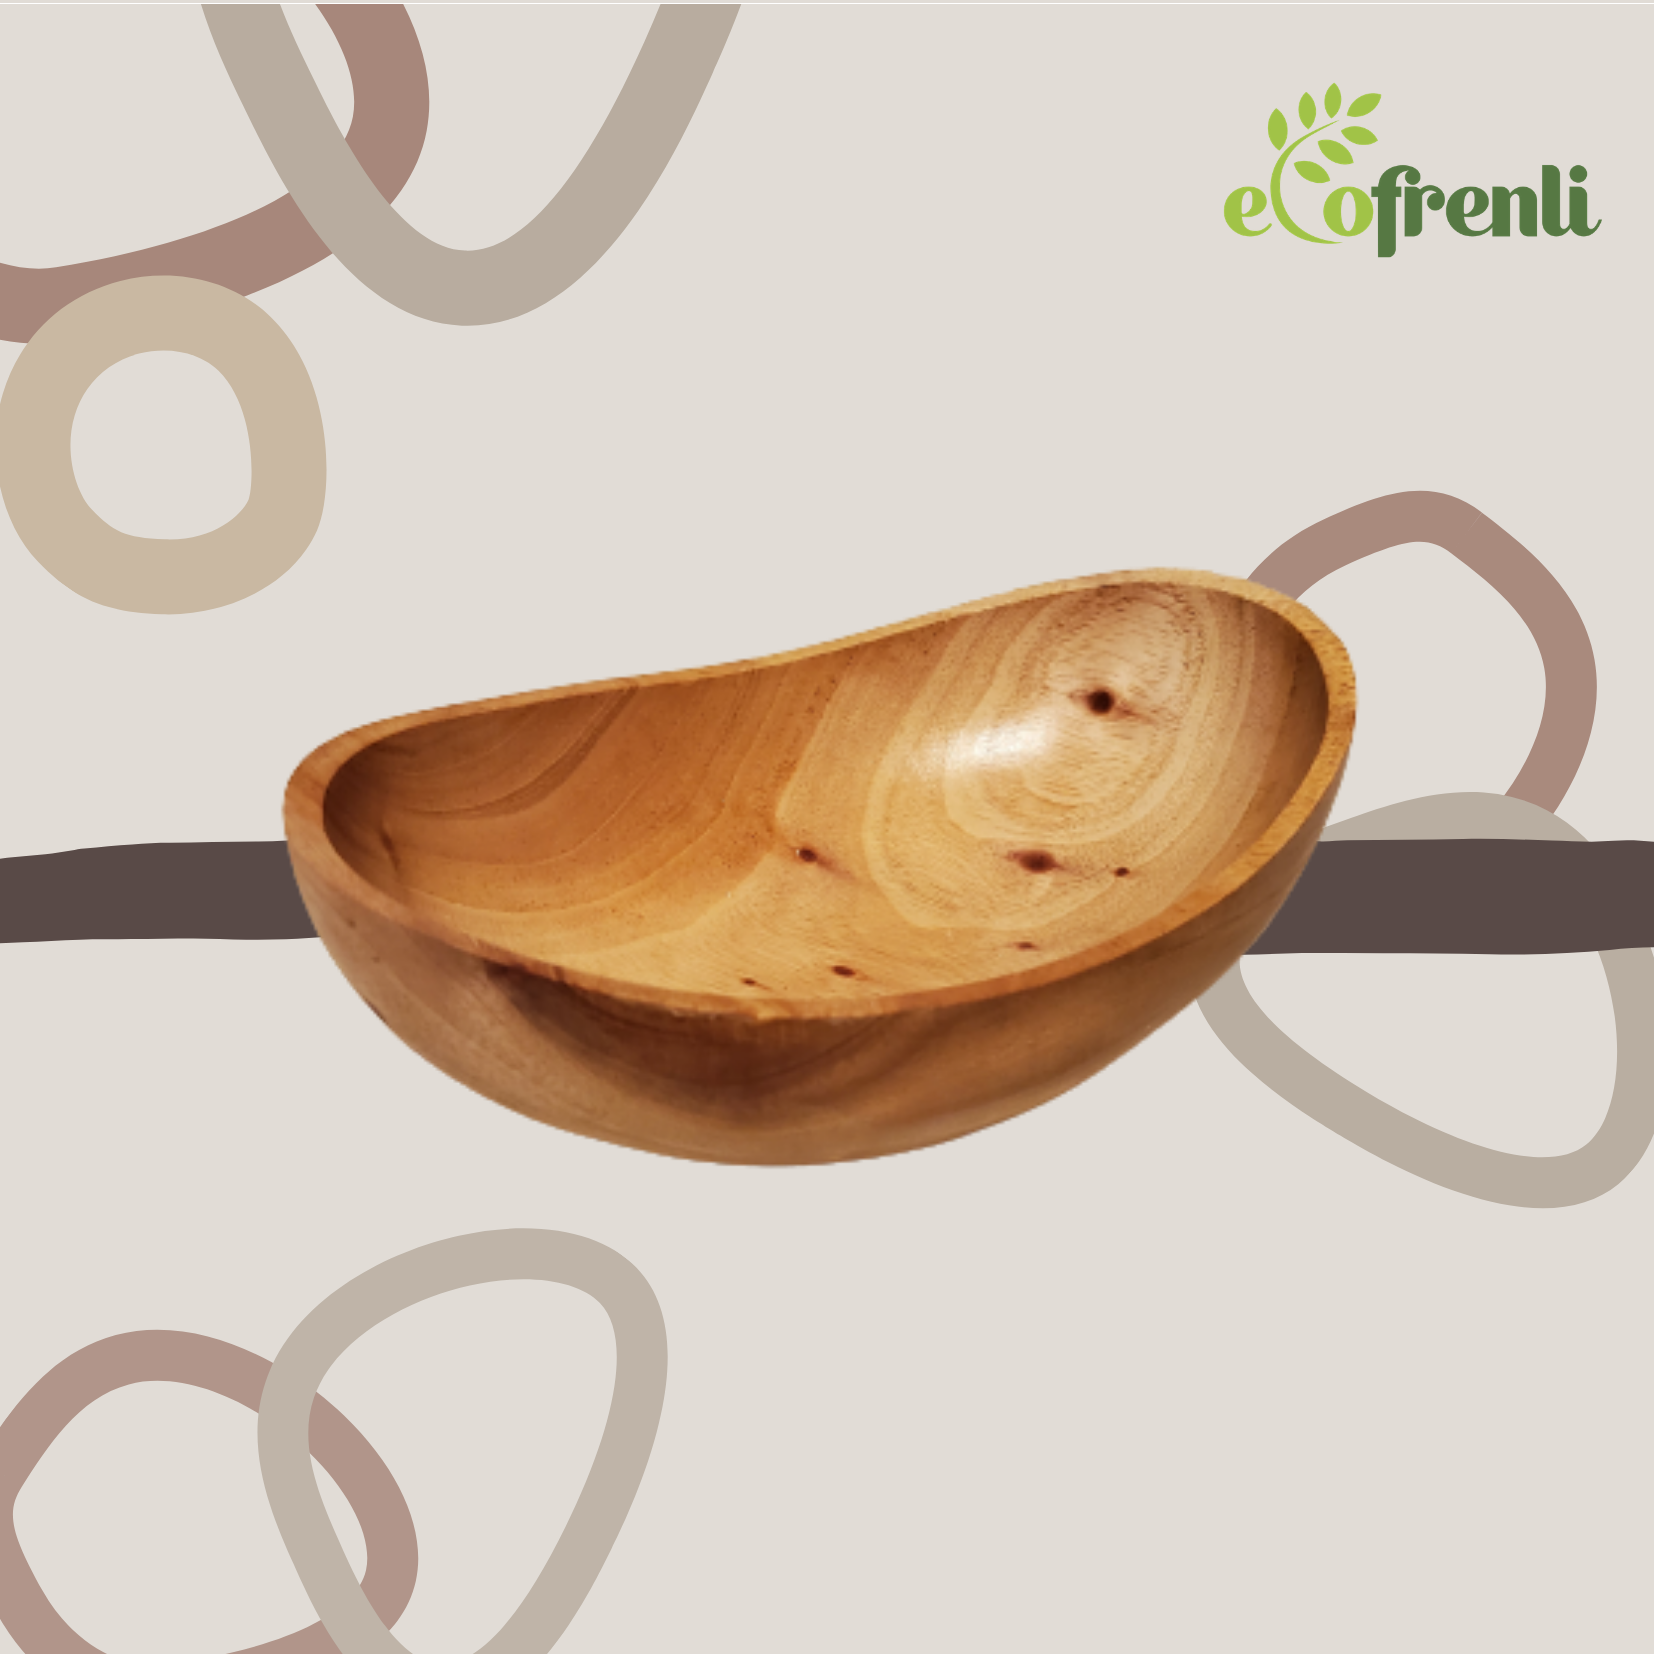 Solid Teak Wood Food Bowl - Ecofrenli.com